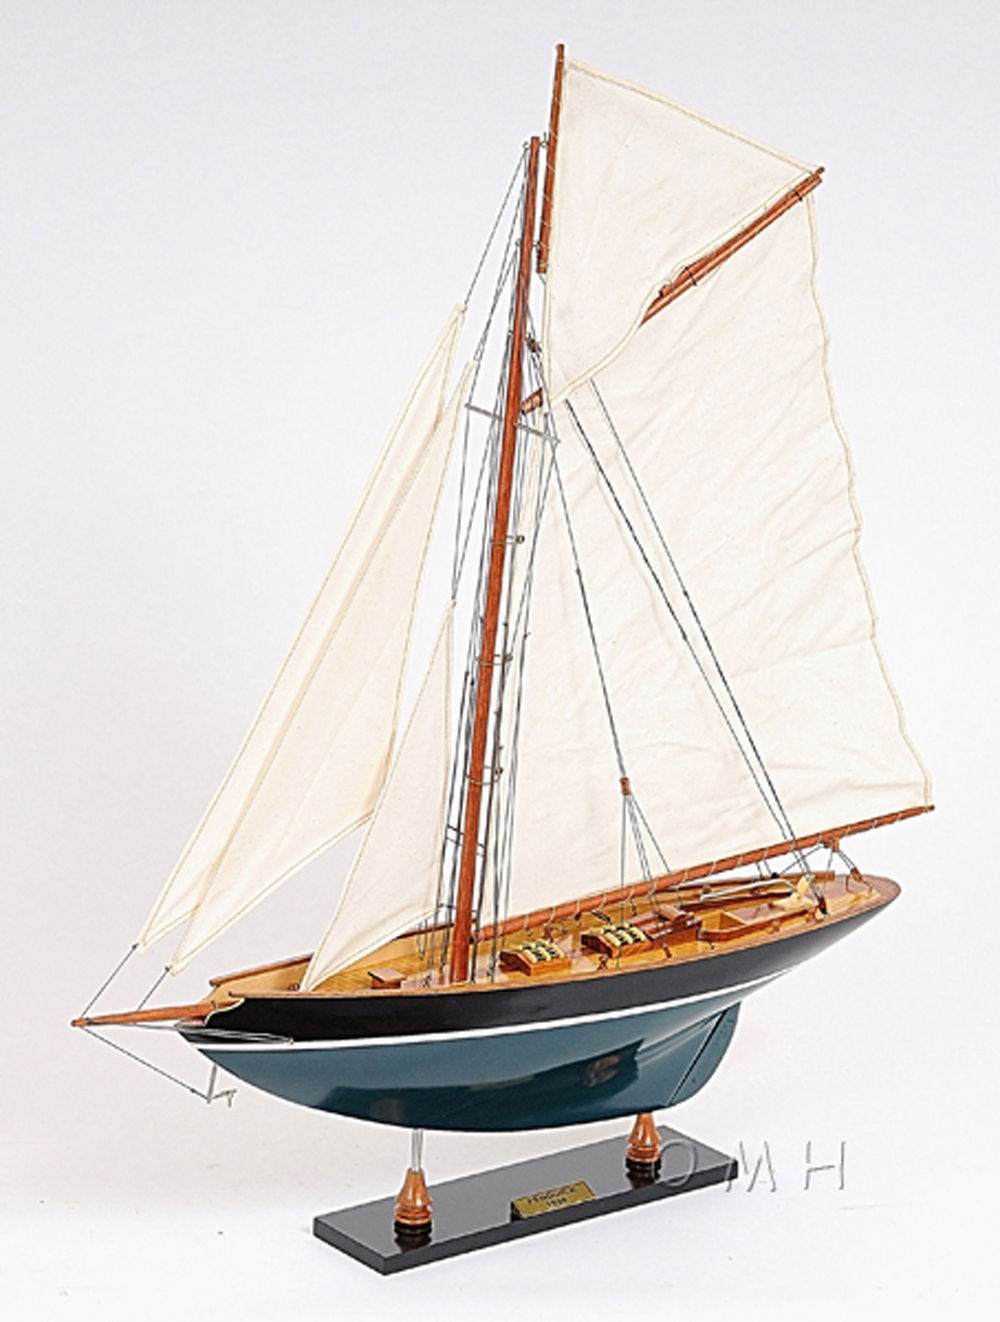 https://gonautical.com/6623/pen-duick-wooden-sailboat-model.jpg